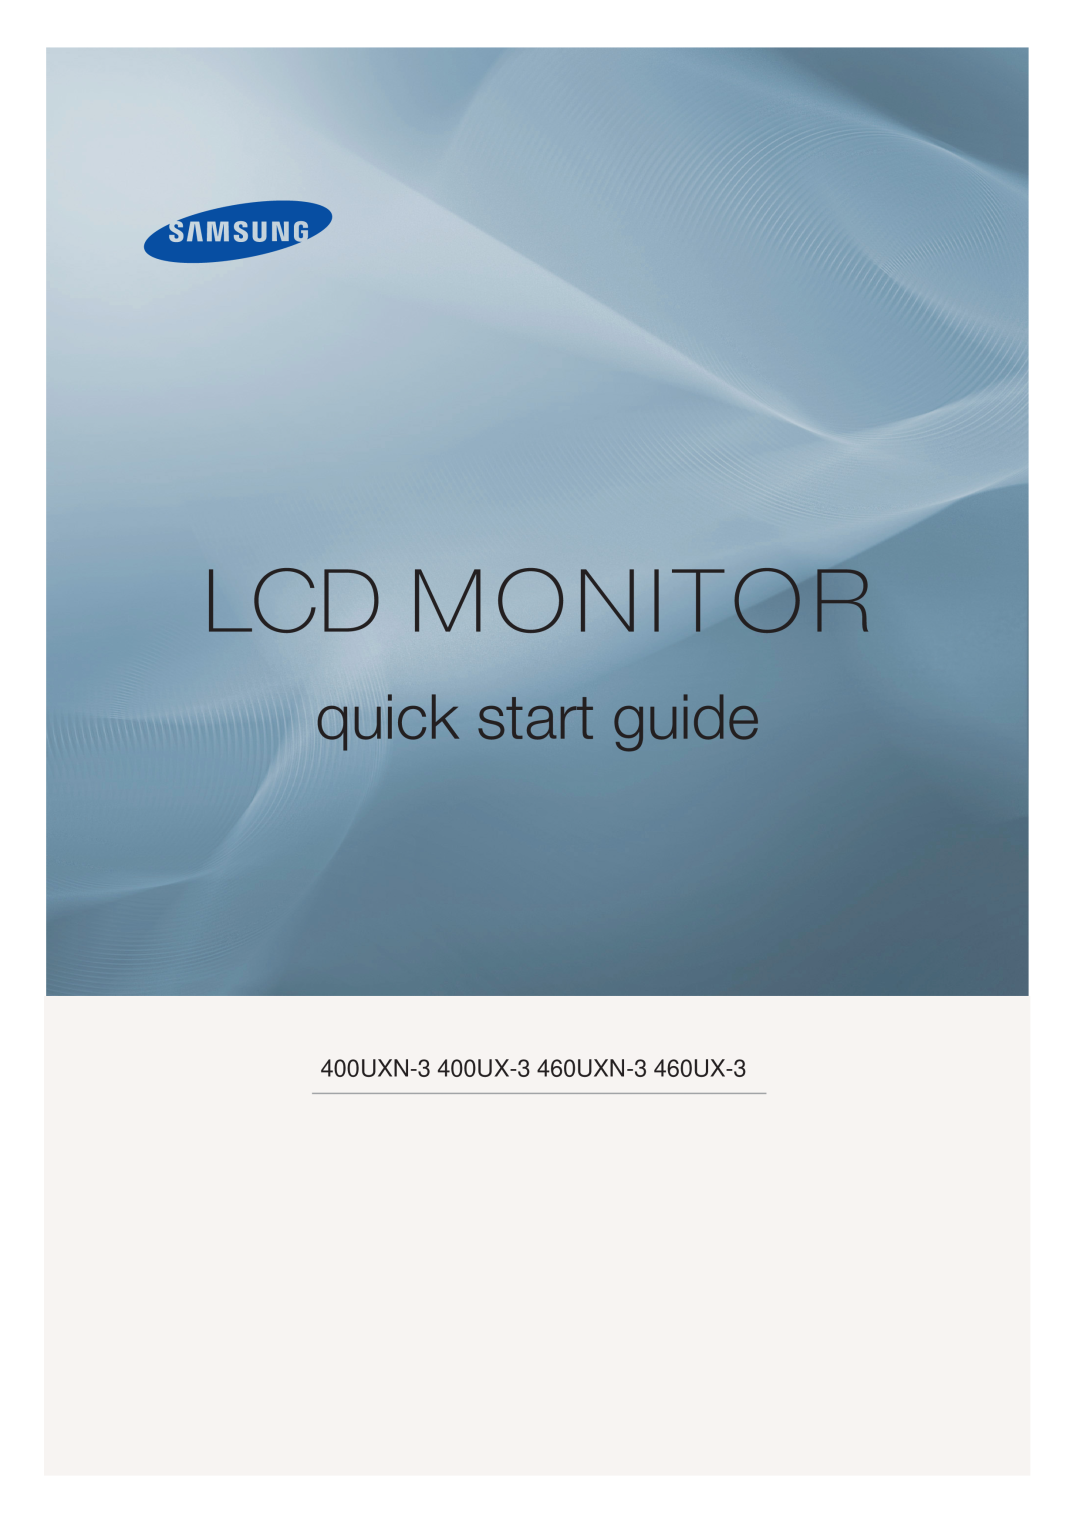 Samsung LH40GWSLBC/EN, LH40GWTLBC/EN manual Lcd Monitor, quick start guide, 400UXN-3 400UX-3 460UXN-3 460UX-3 